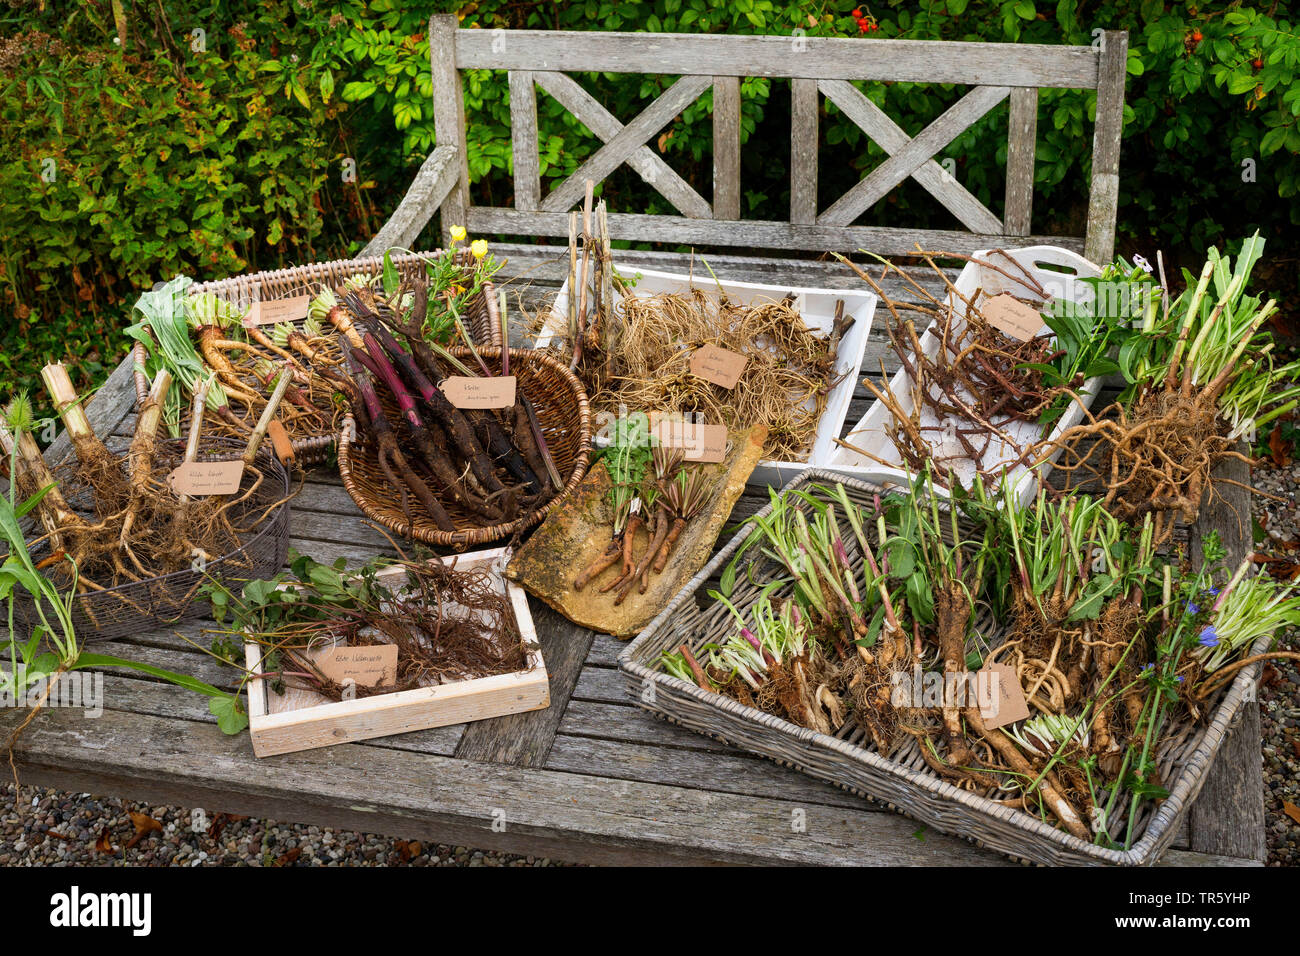 harvestig of roots of differen wild plants, Germany Stock Photo